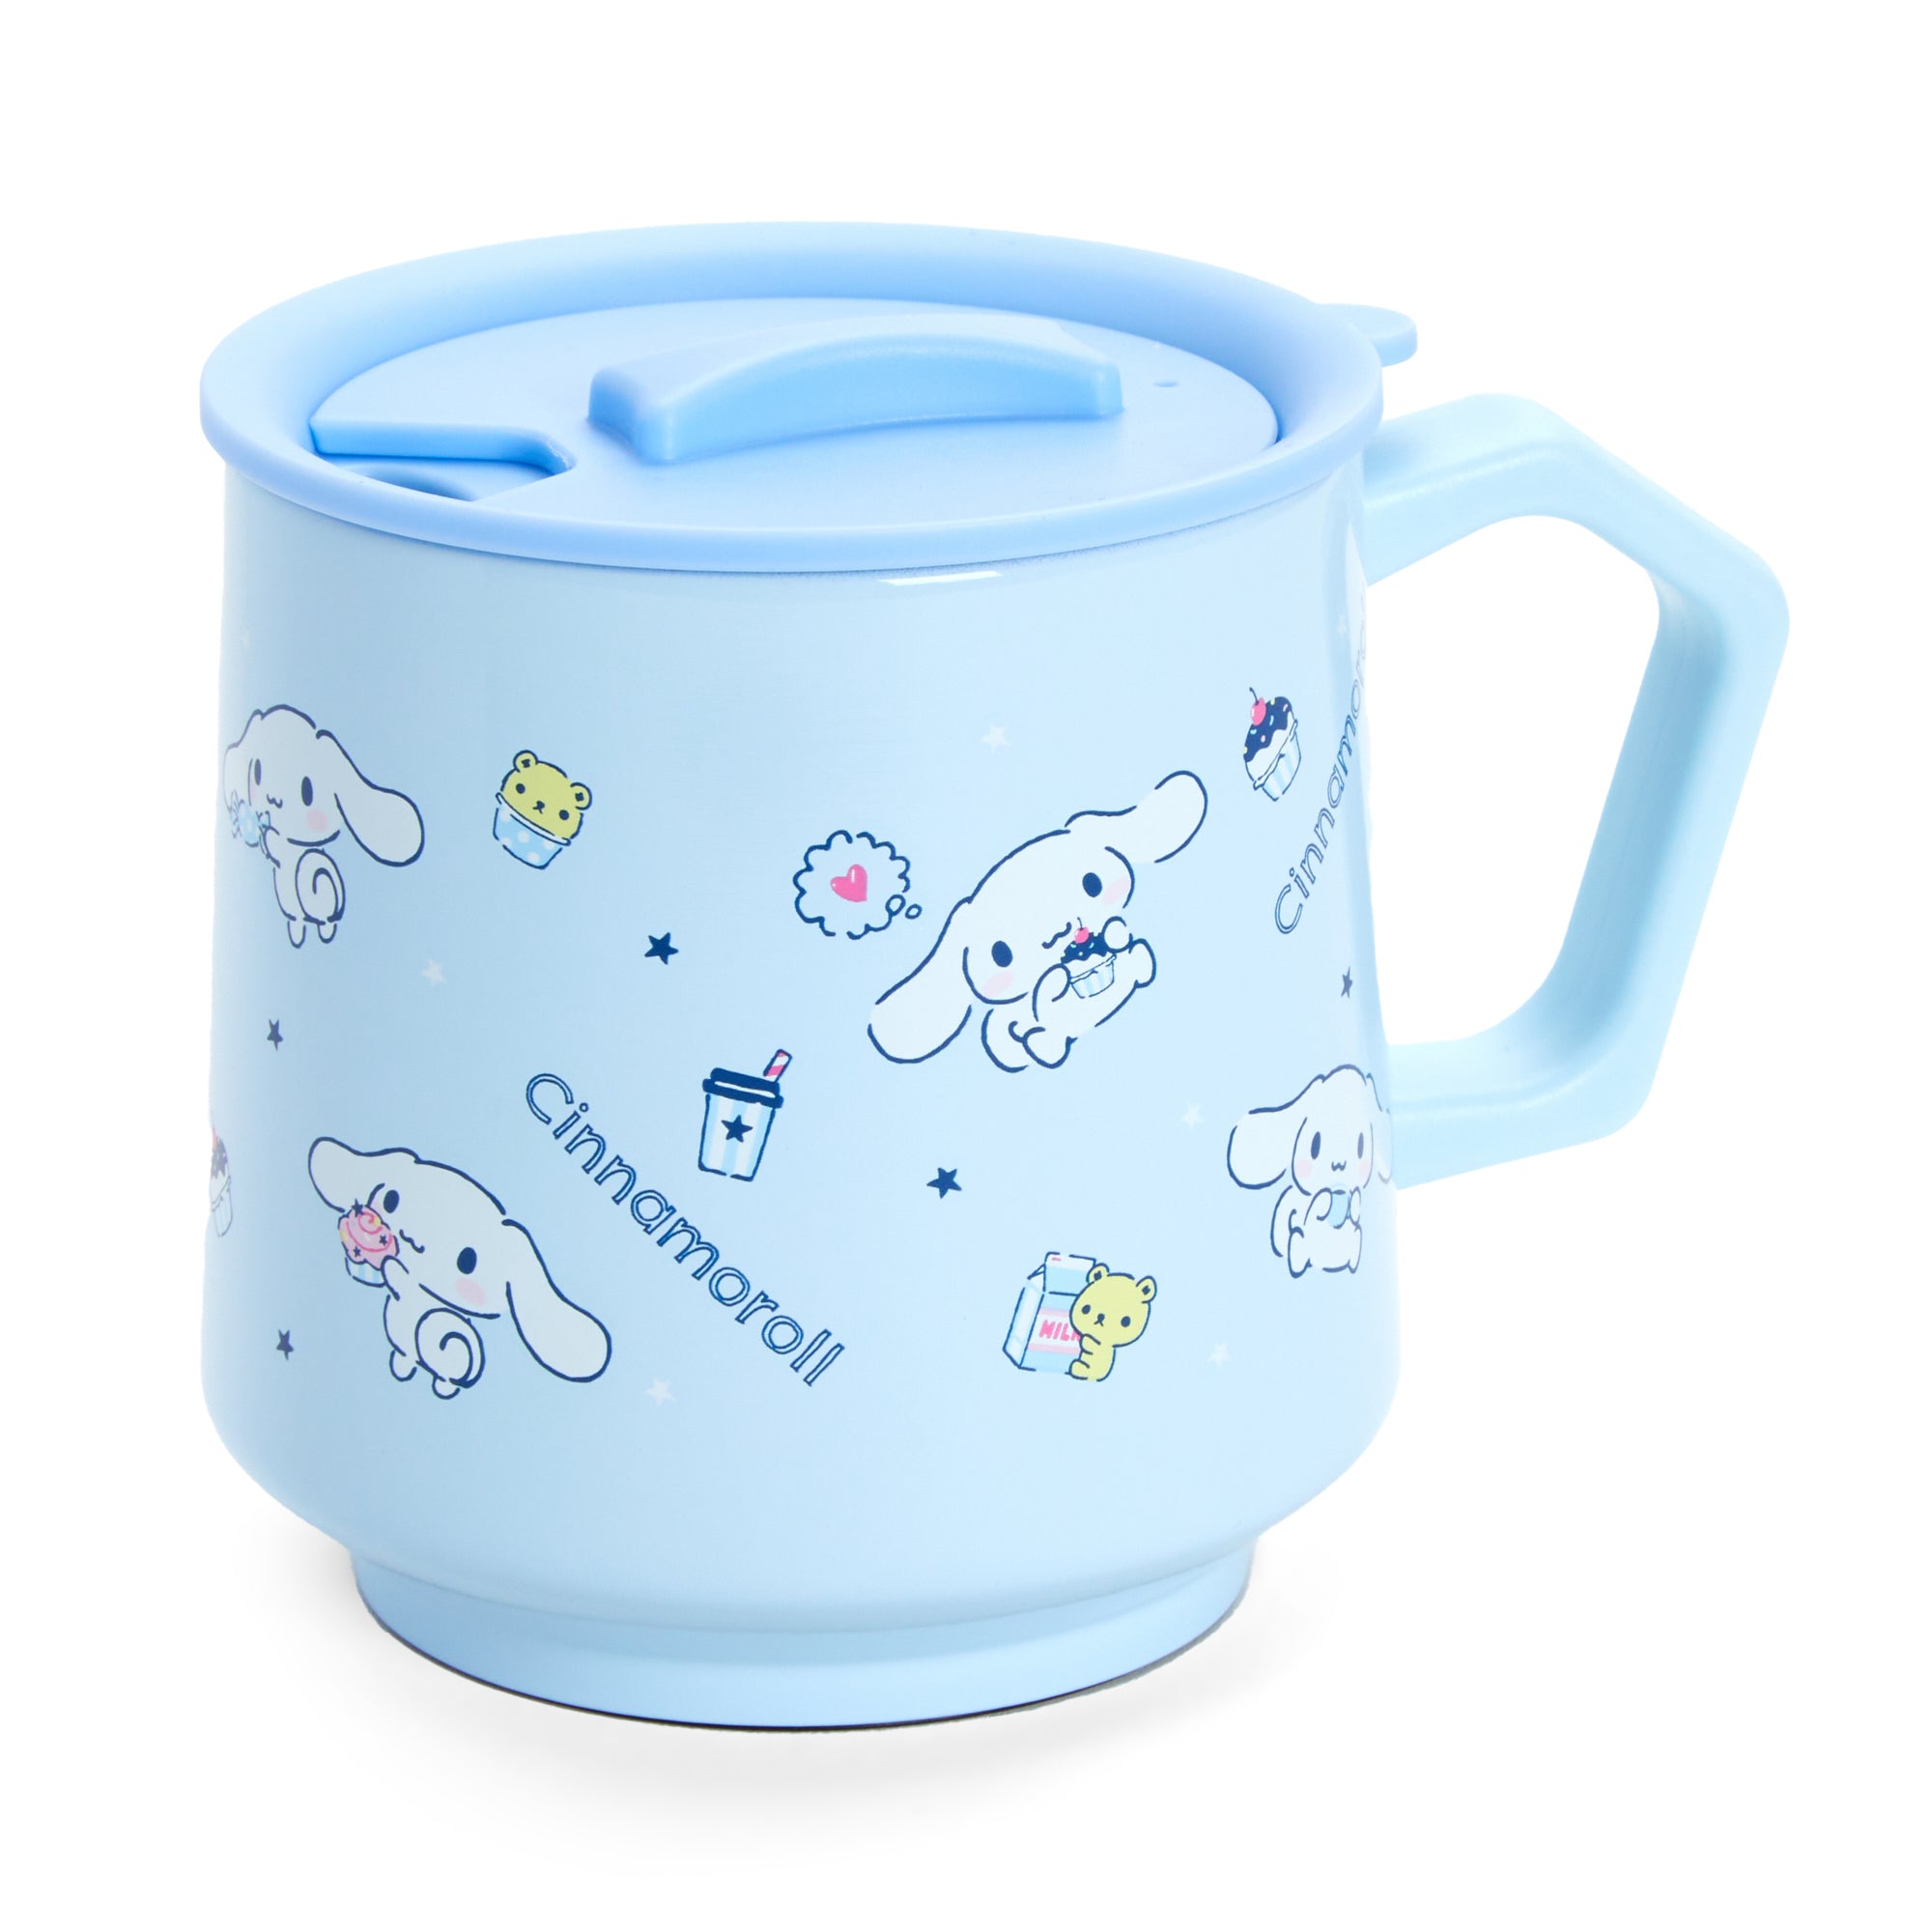 Hello Kitty Cinnamoroll Insulated Coffee Mug With Handle And Lid